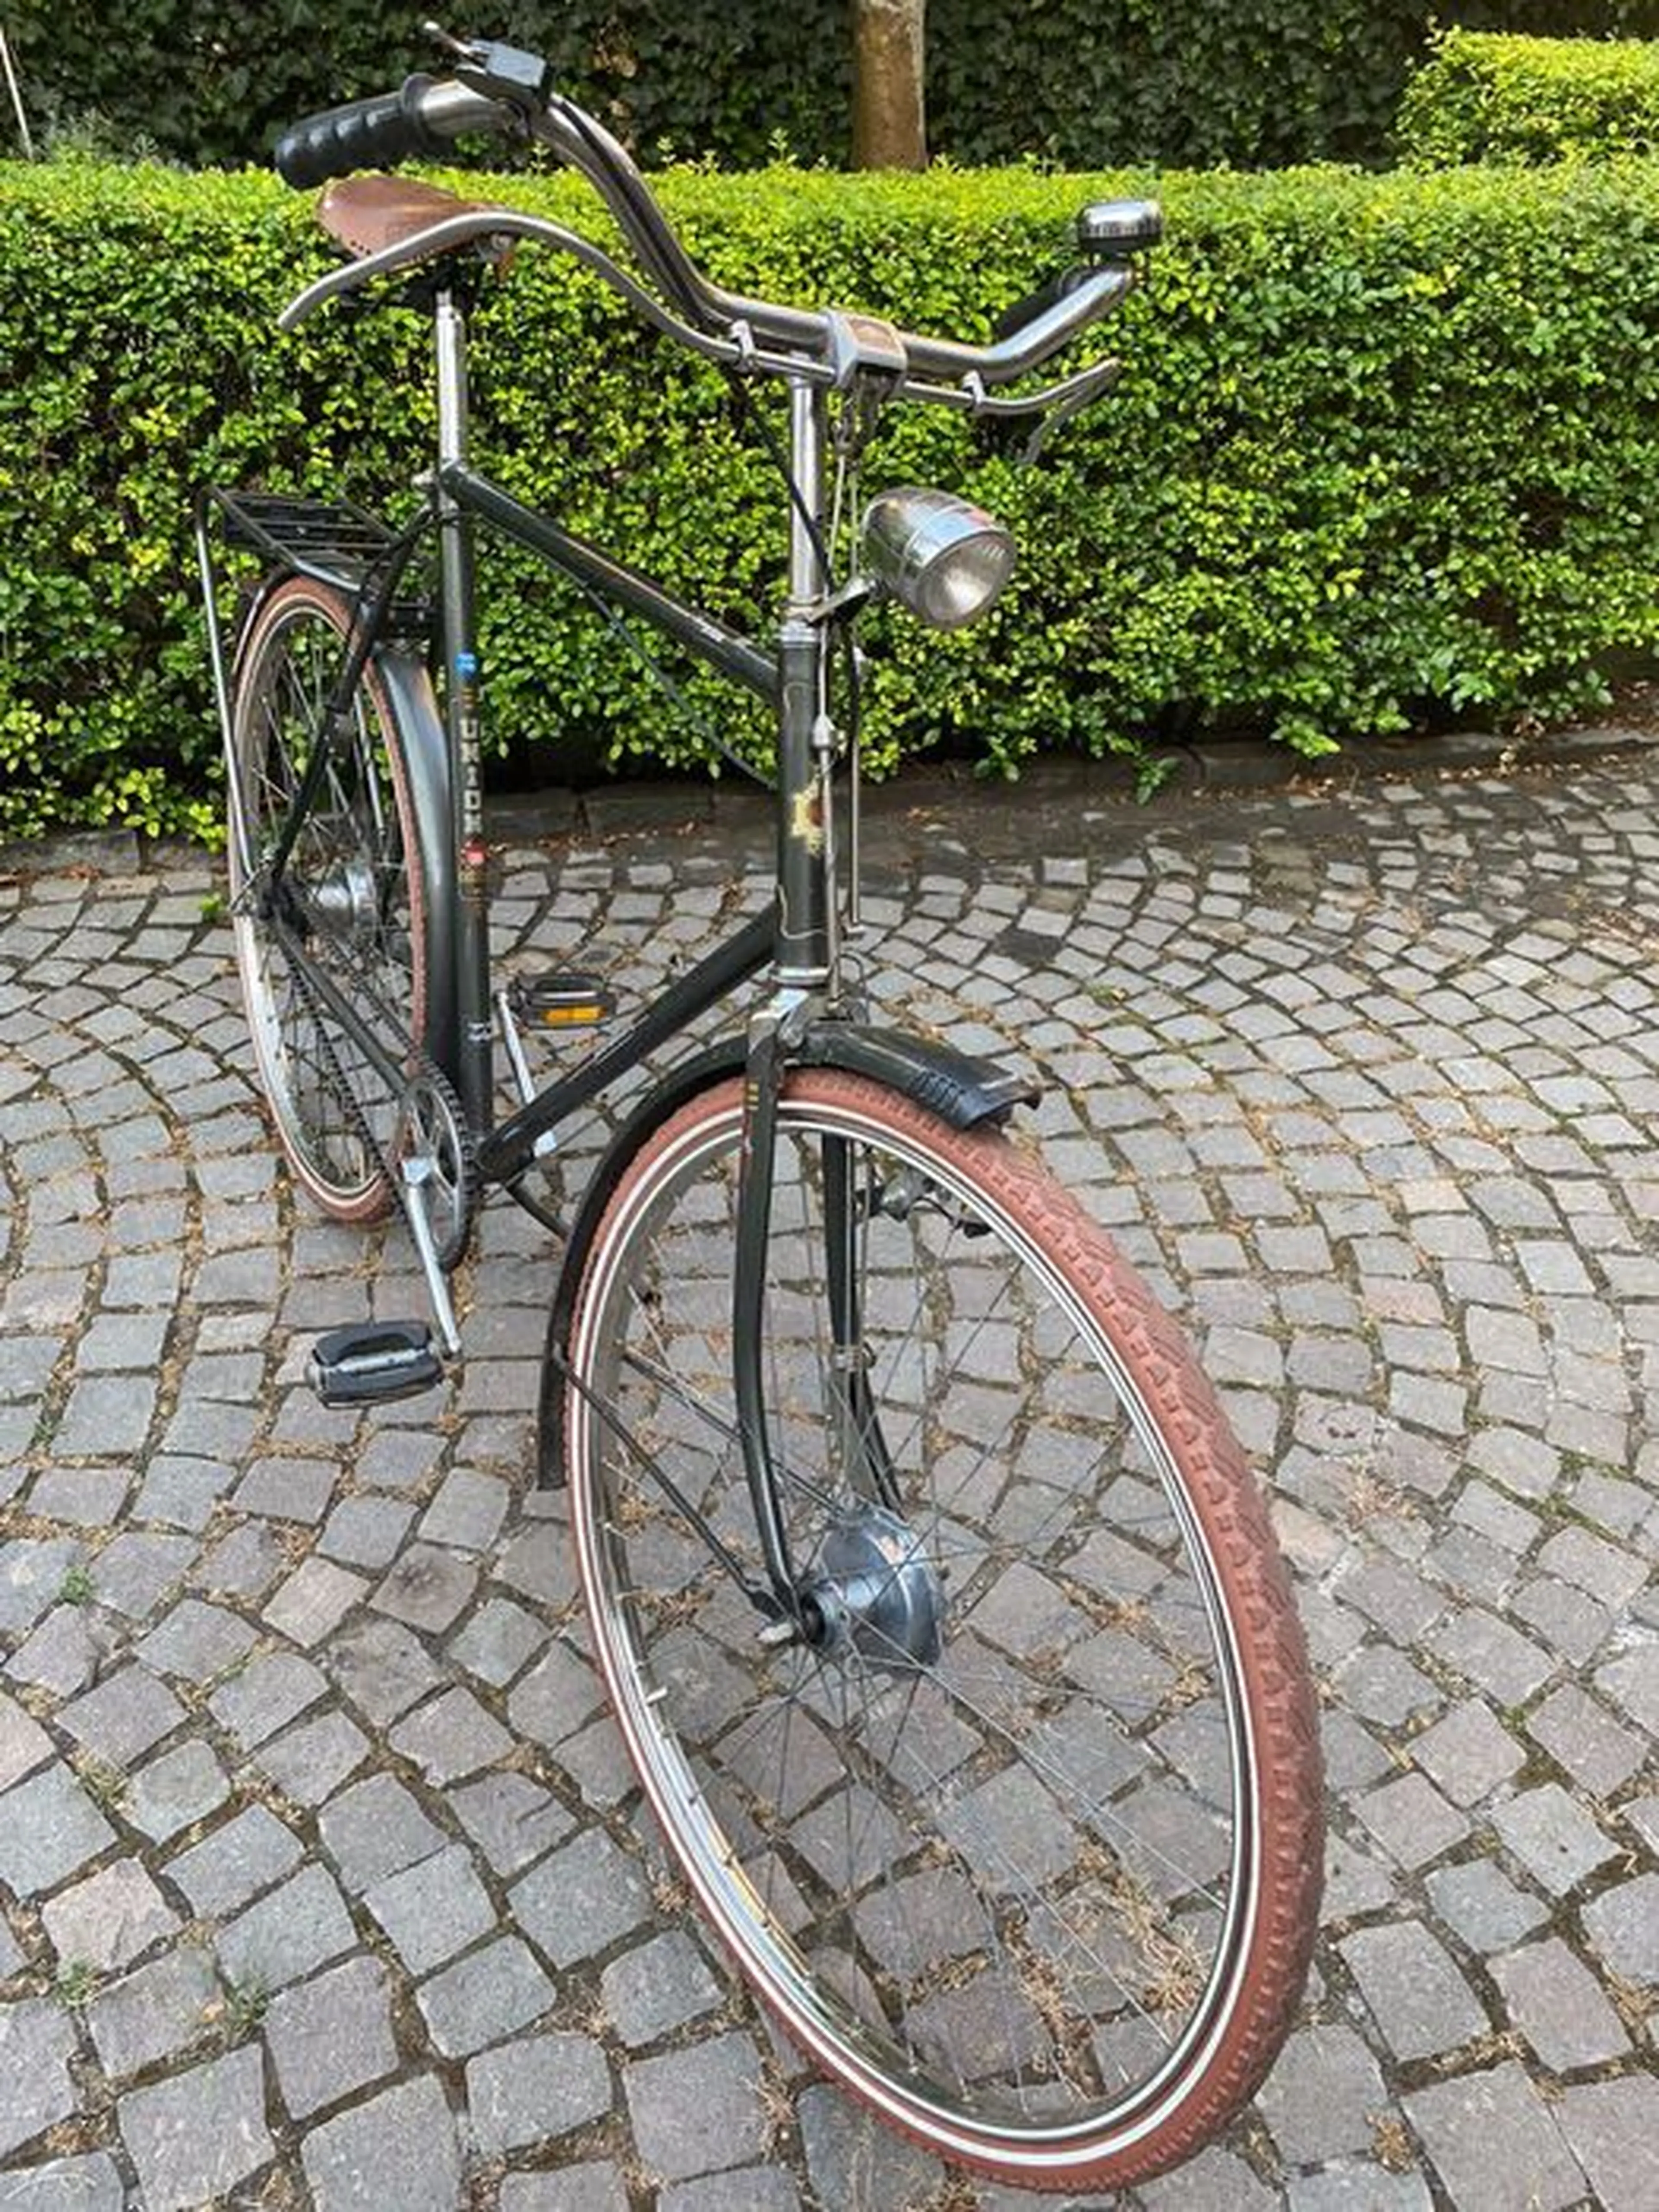 4. Bicicleta Union Retro 62cm